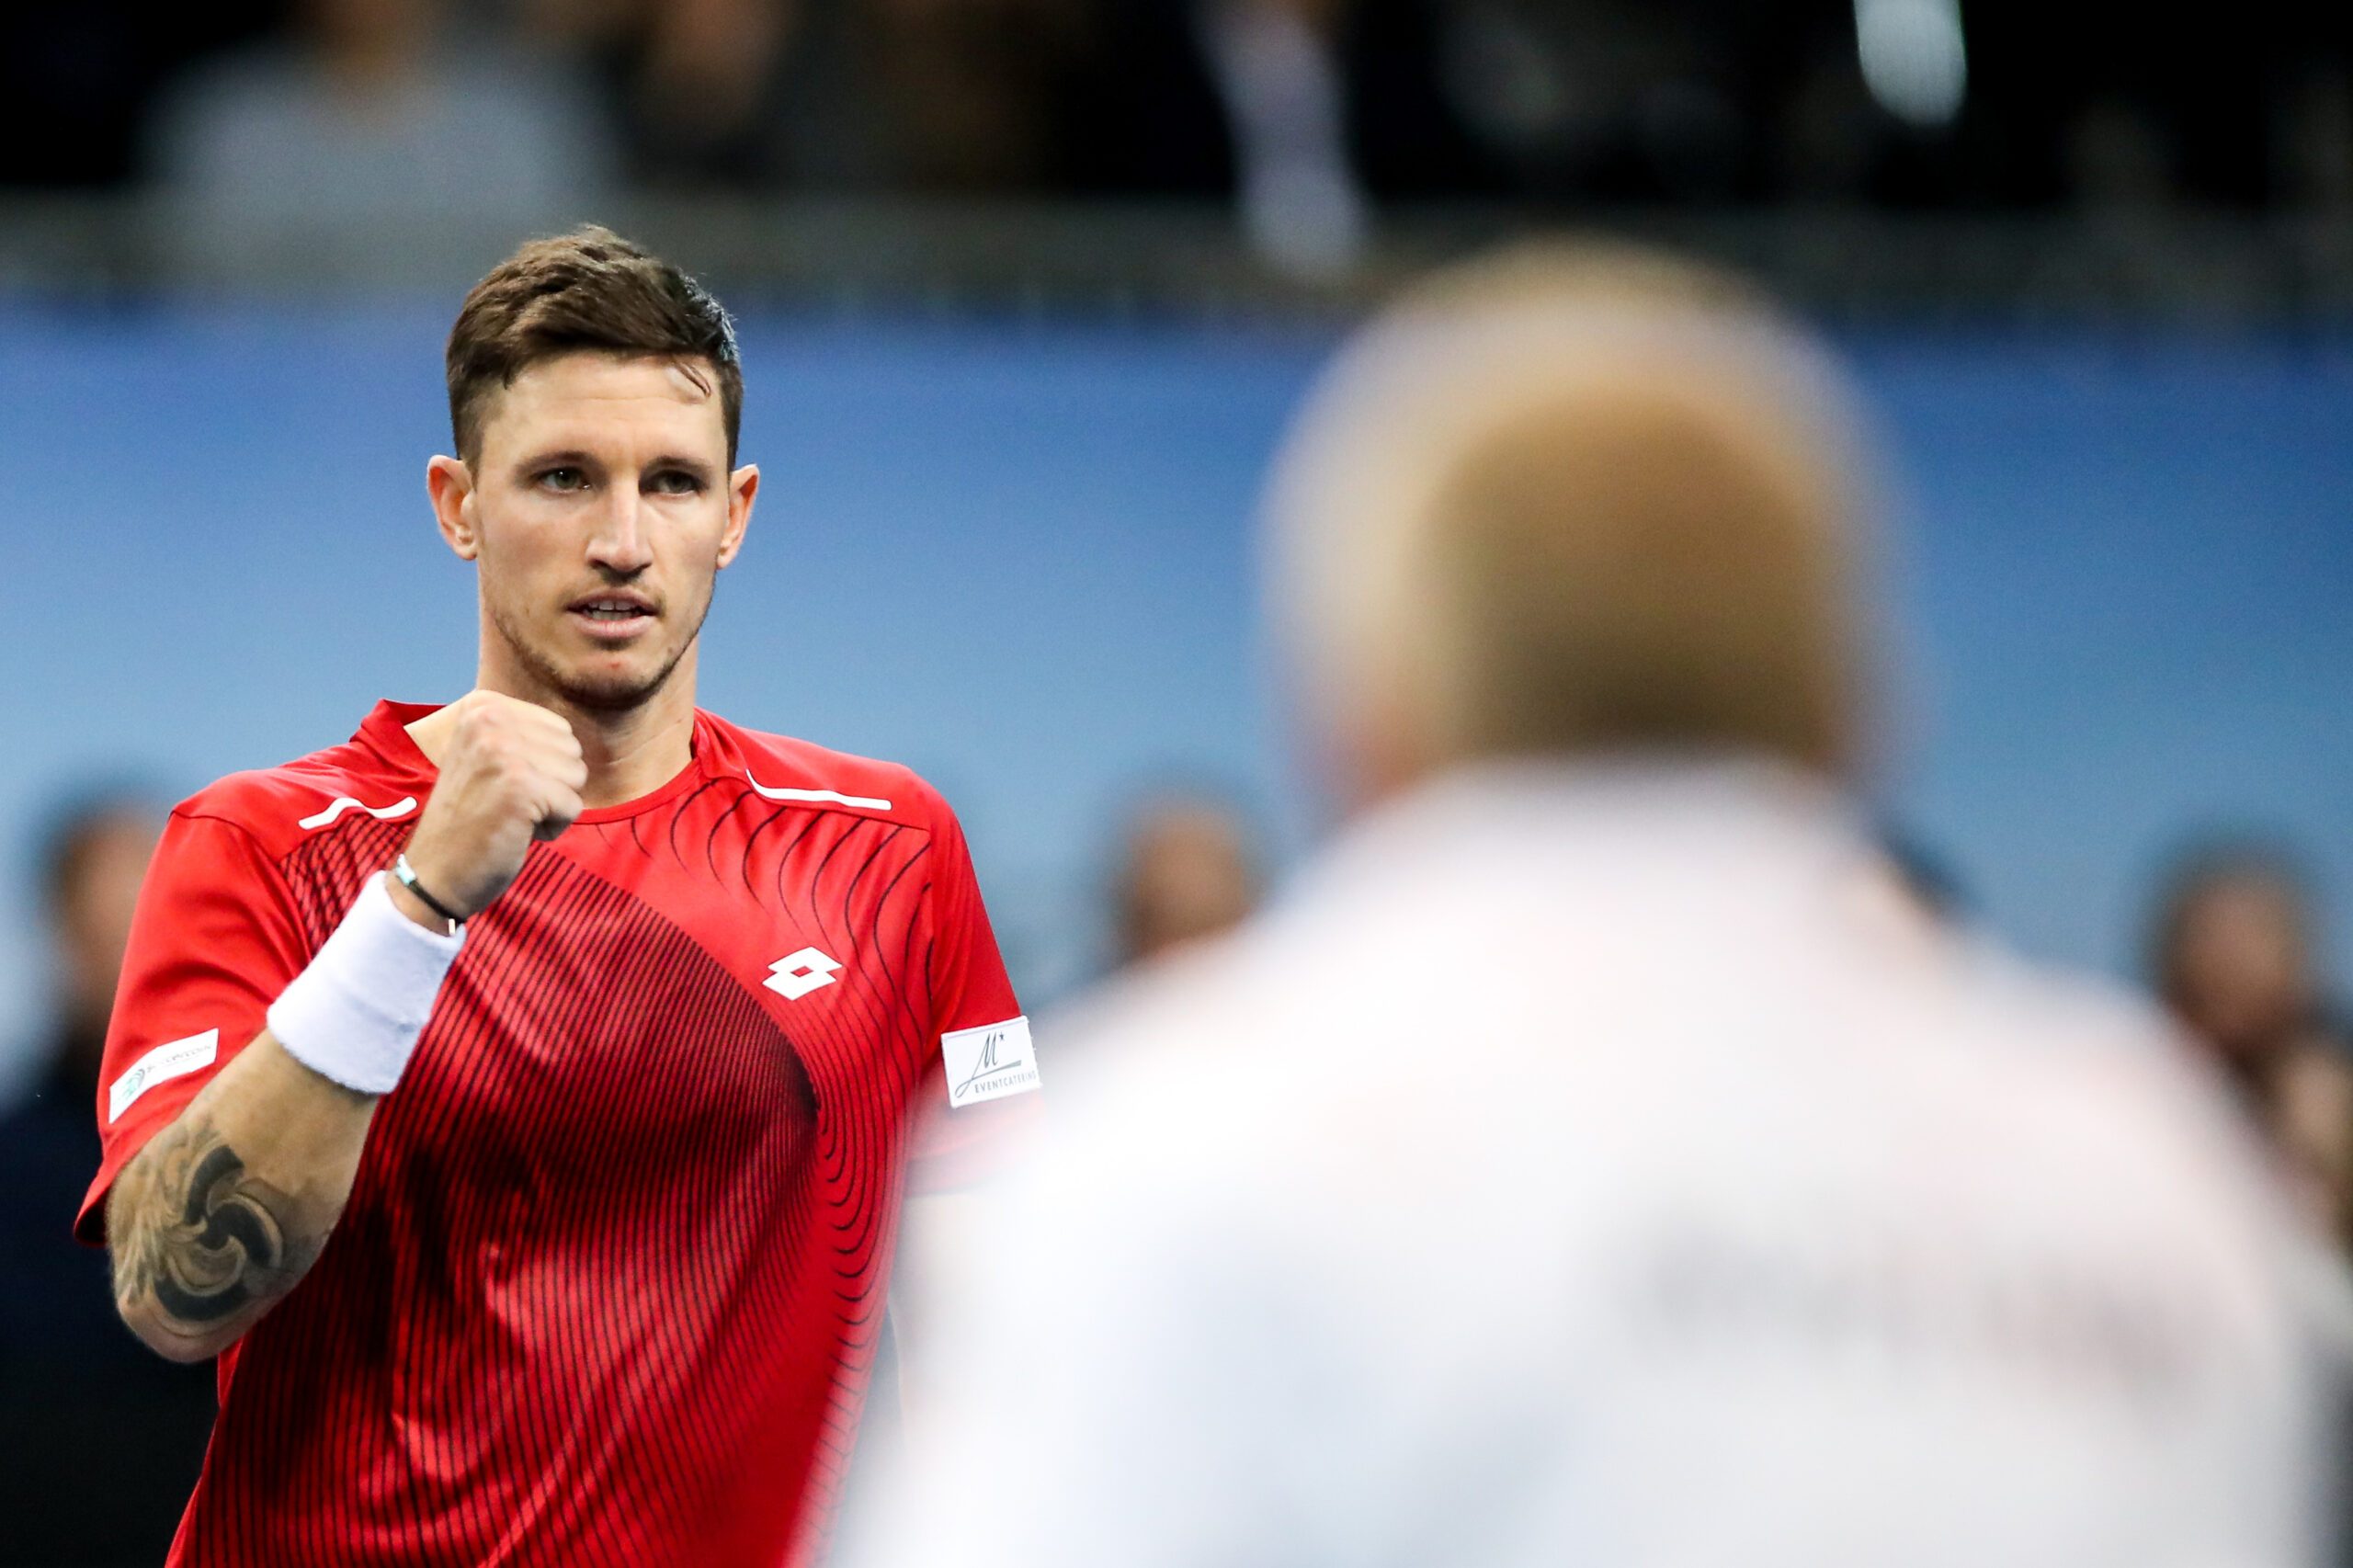 PREMSTAETTEN,AUSTRIA,07.MAR.20 - TENNIS - ITF Davis Cup, Austria vs Uruguay. Image shows the rejoicing of Dennis Novak (AUT).